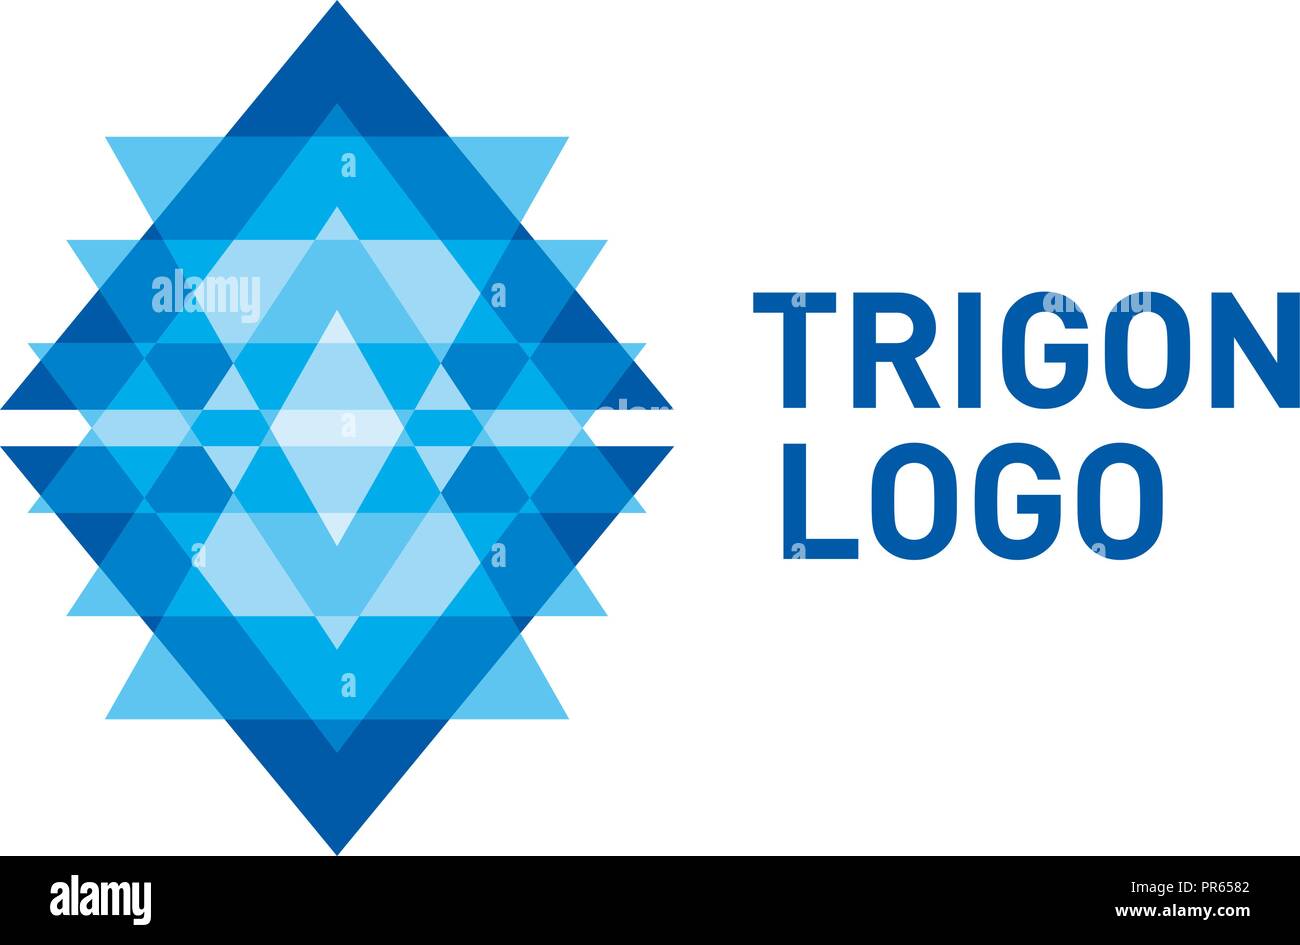 Triangle logo symbol. Stock Vector